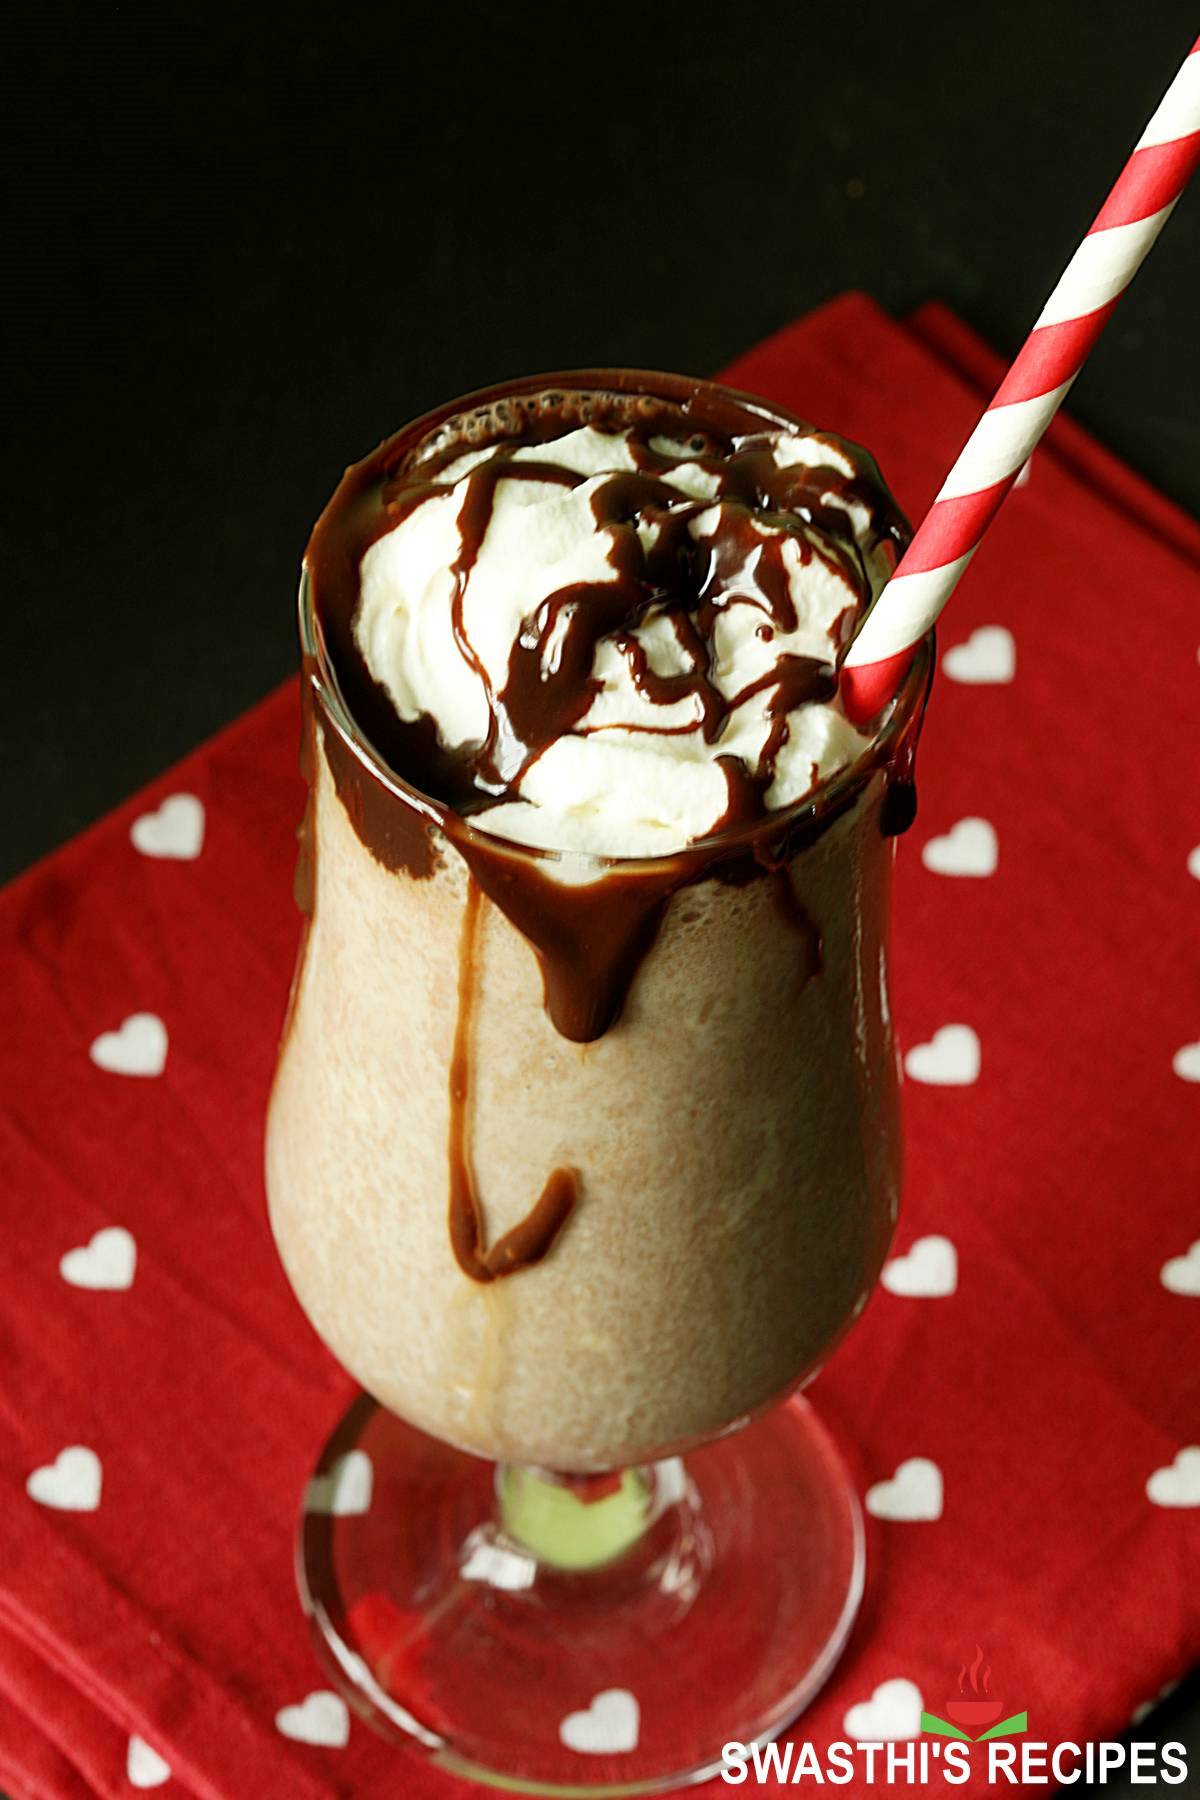 Chocolate milkshake made with ice cream